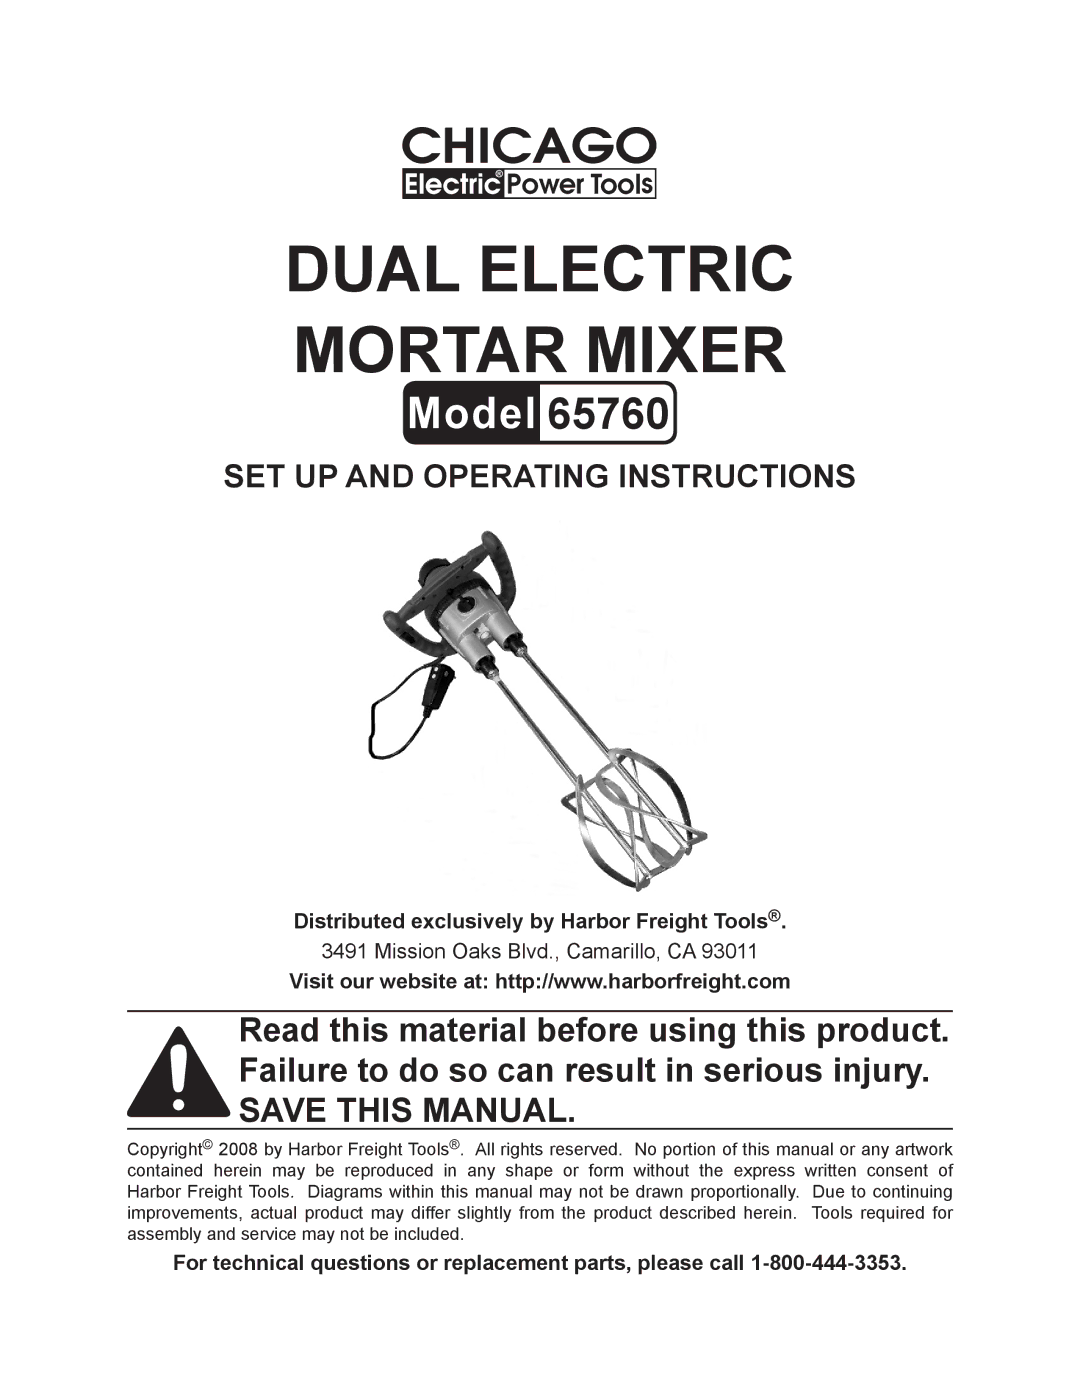 Chicago Electric 65760 manual Dual electric mortar mixer 